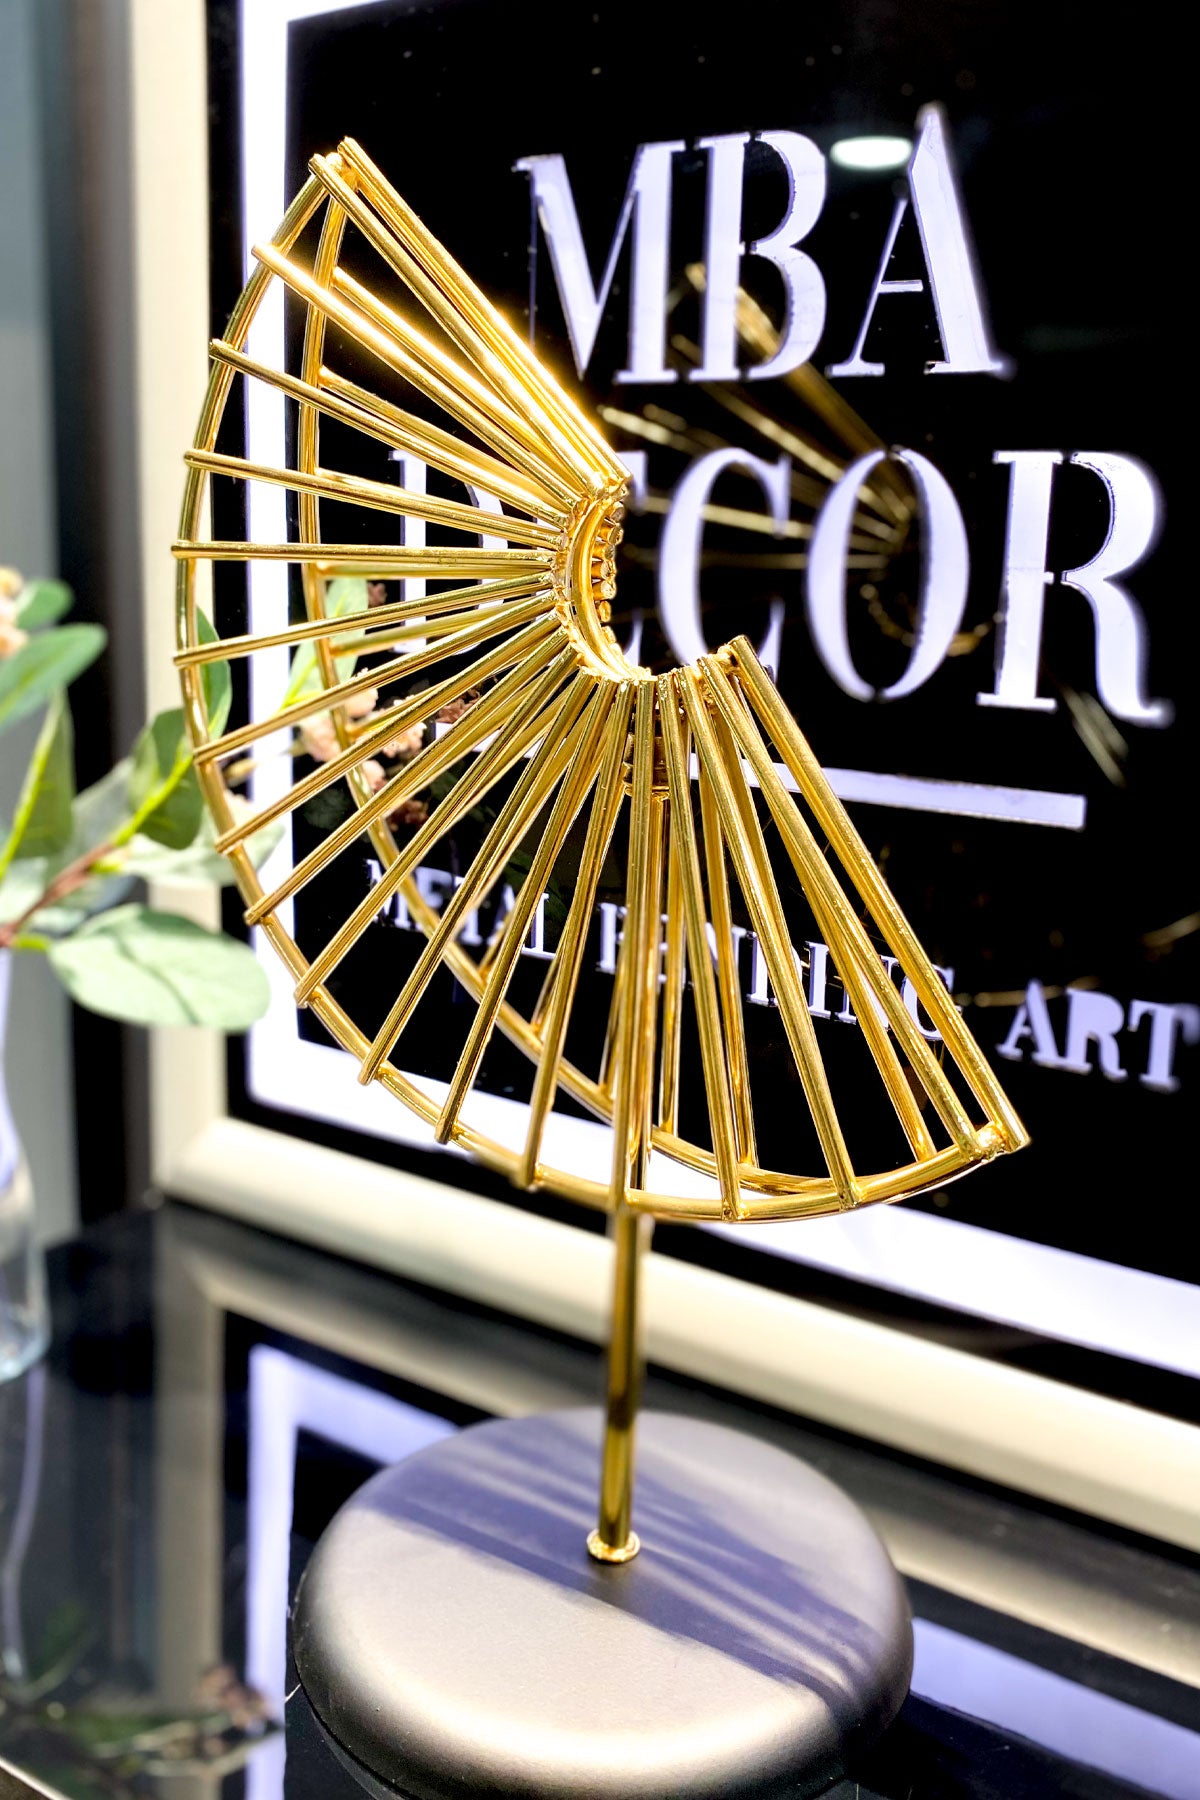 İkili Gold Dekoratif Obje Yılbaşı Dekorasyon Ofis Konsol Zigon Sehpa Üstü Paslanmaz Metal Rutaceae